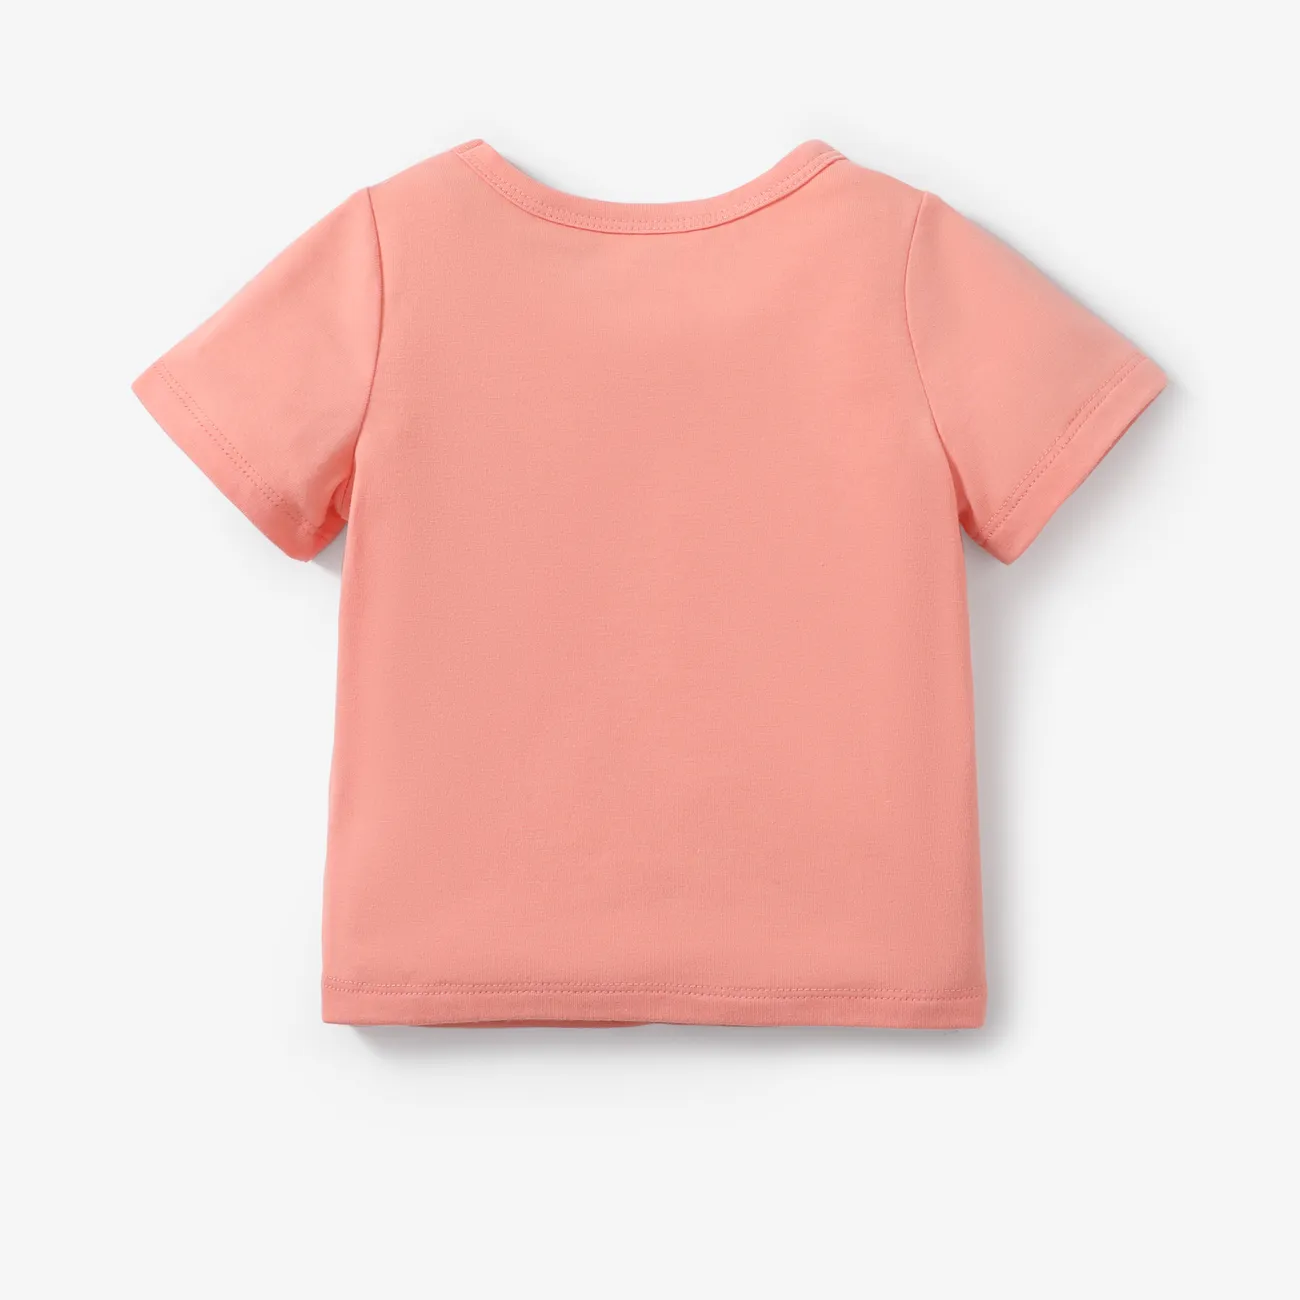 Disney Winnie the Pooh 1pc Baby Boy/Baby Girl T-shirt ou calça xadrez bib pólvora laranja big image 1